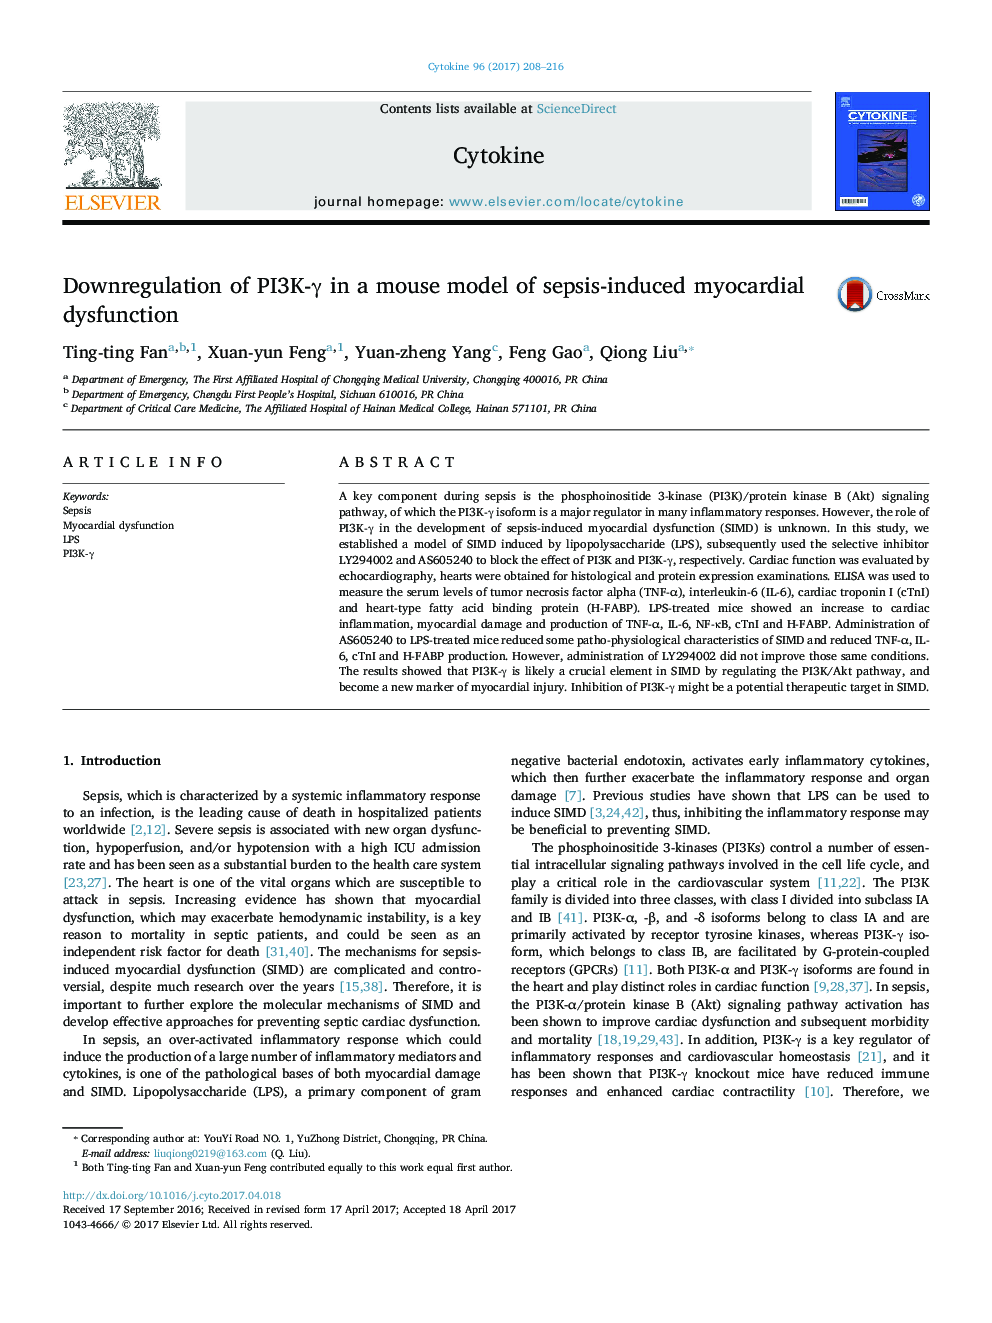 Downregulation of PI3K-Î³ in a mouse model of sepsis-induced myocardial dysfunction